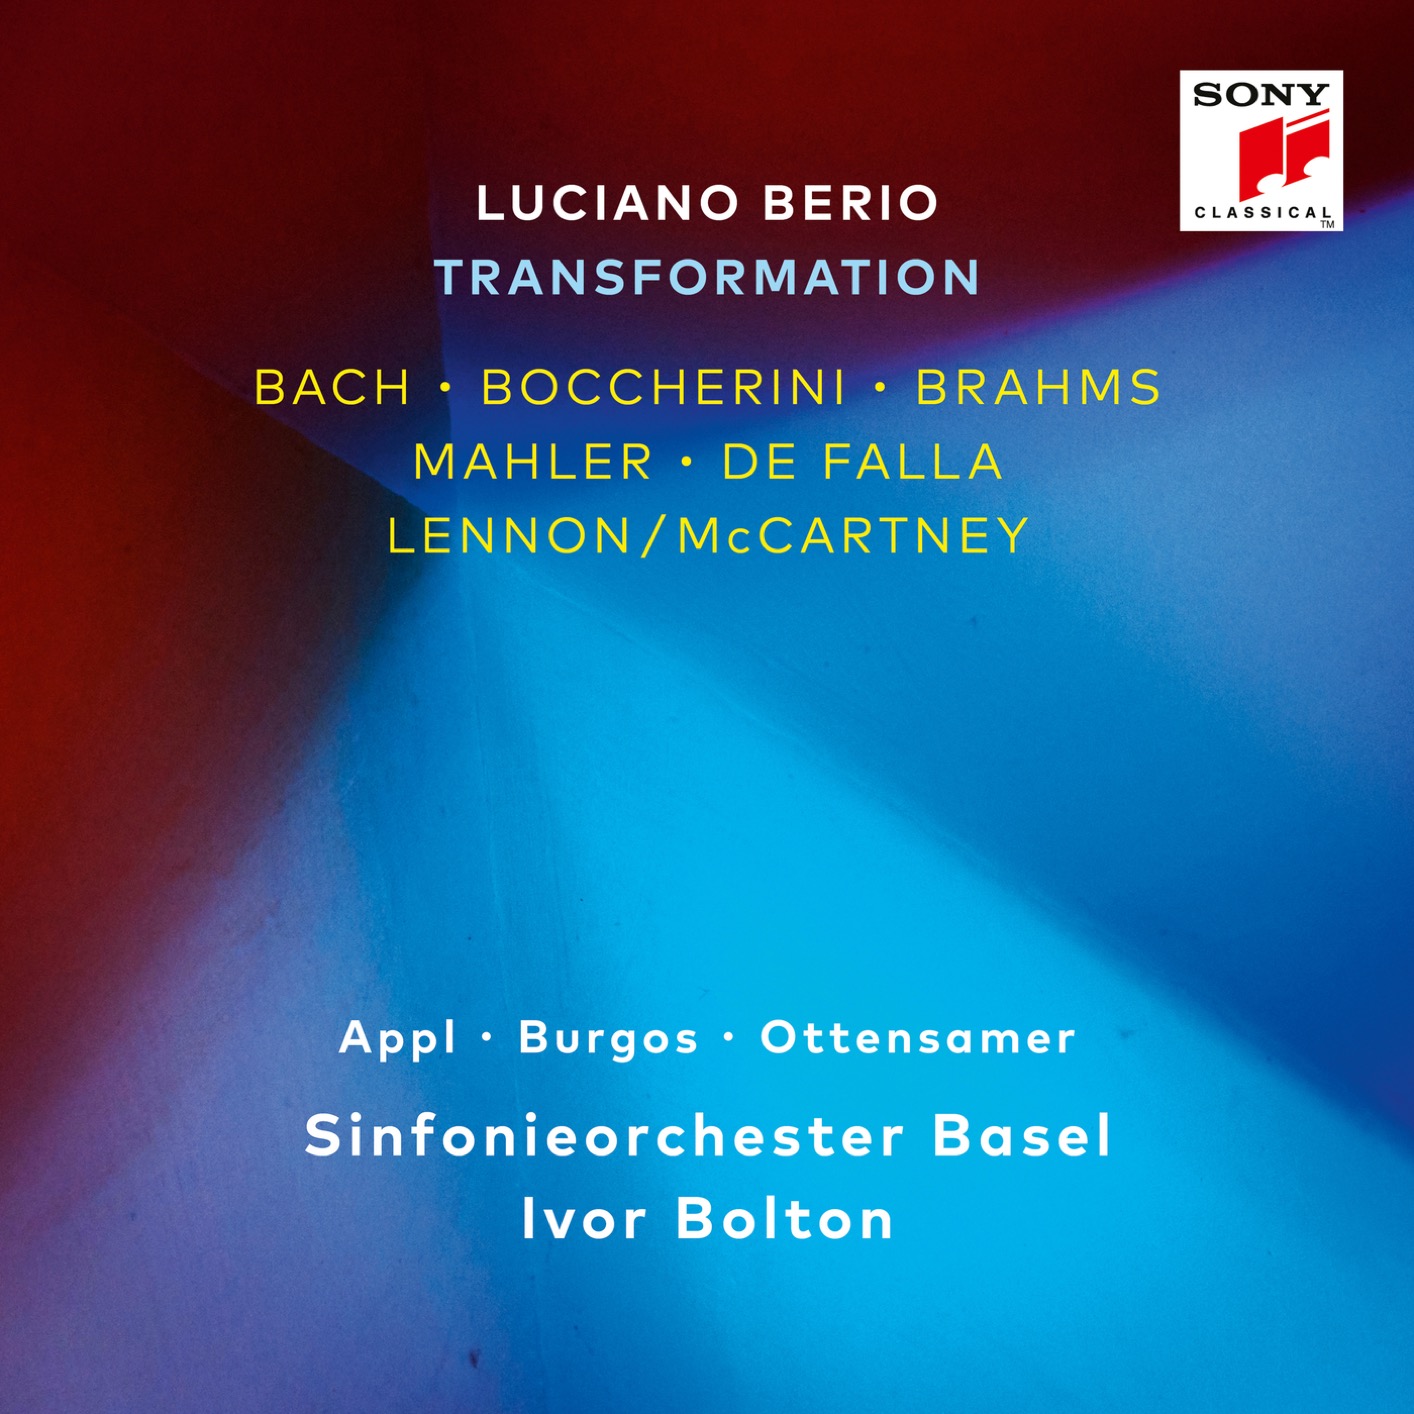 Sinfonieorchester Basel, Ivor Bolton - Luciano Berio - Transformation (2019) [FLAC 24bit/96kHz]